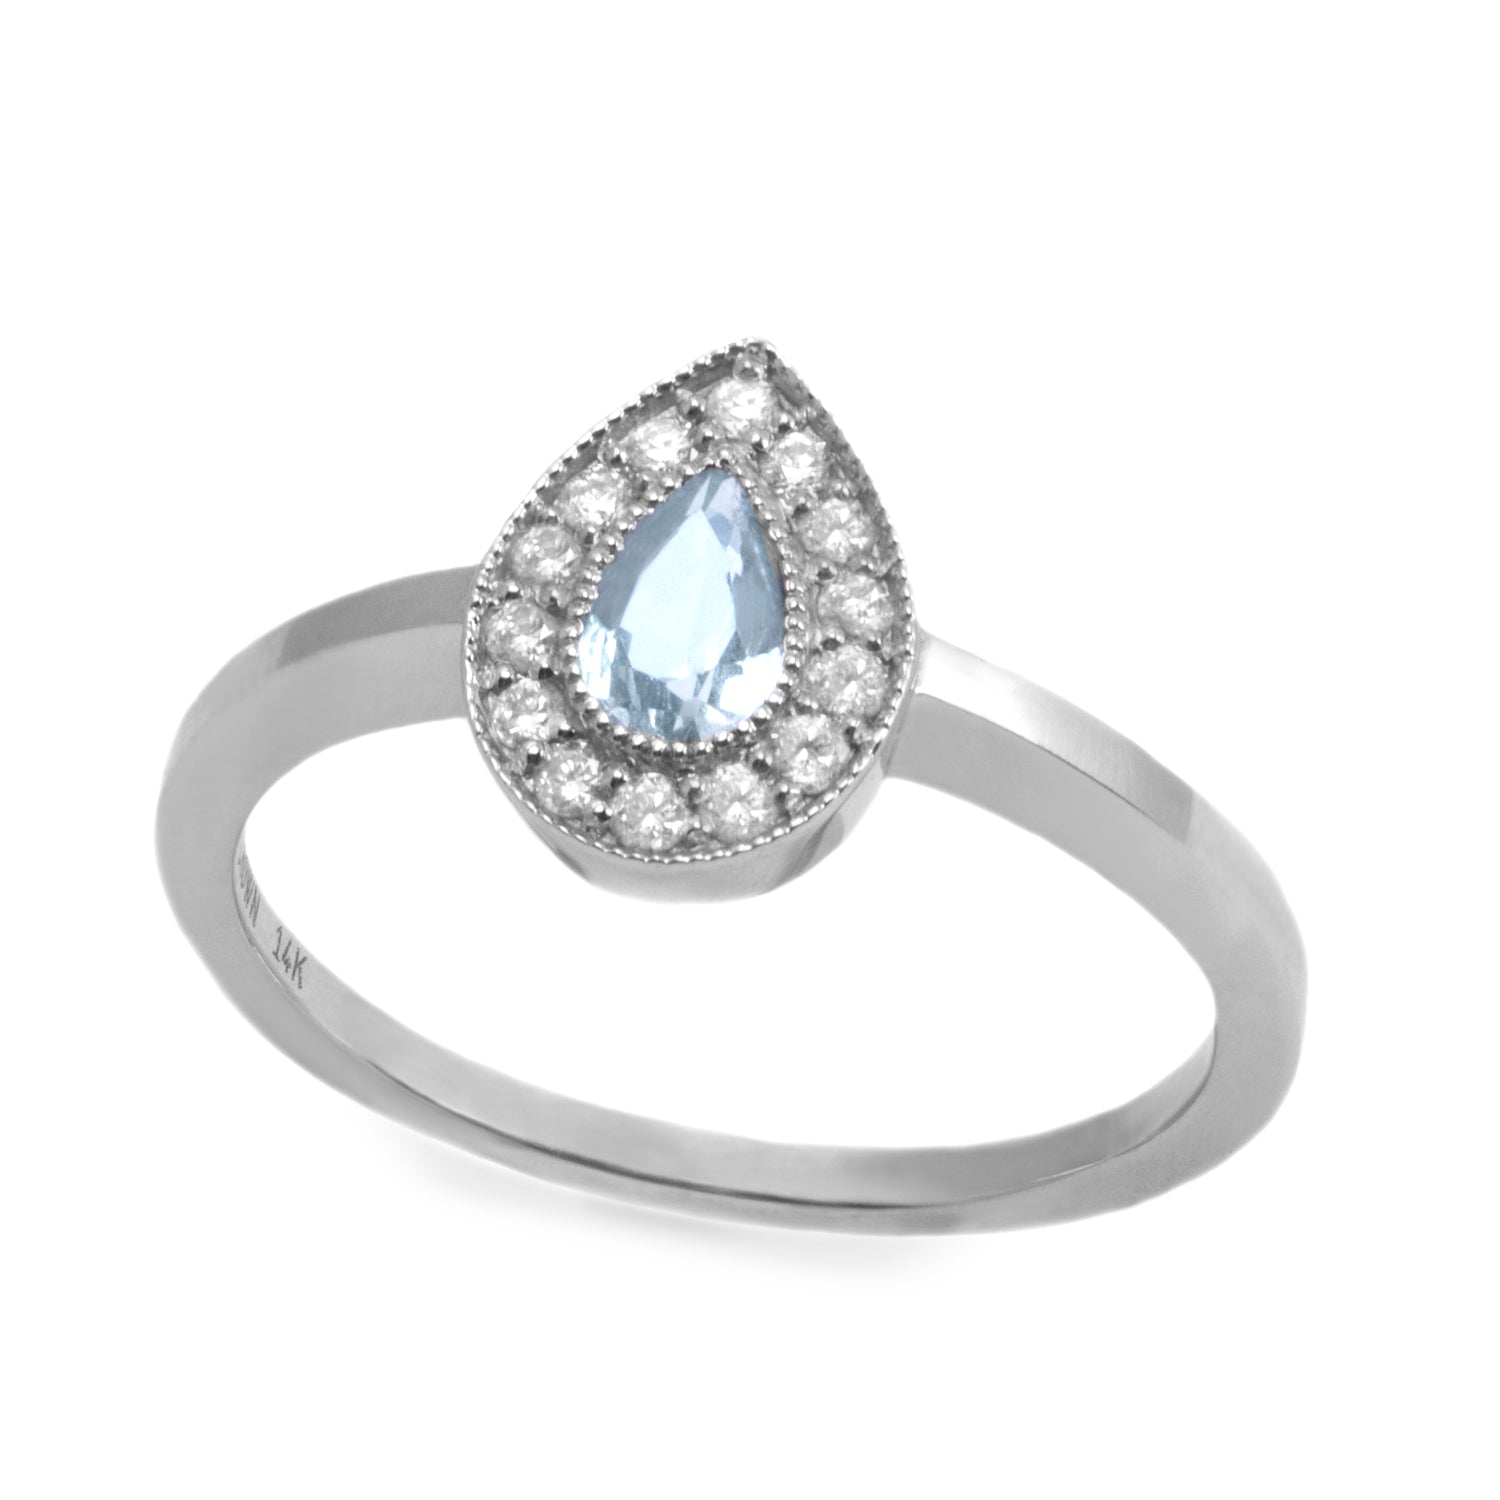 aquamarine and diamonds on a white gold ring